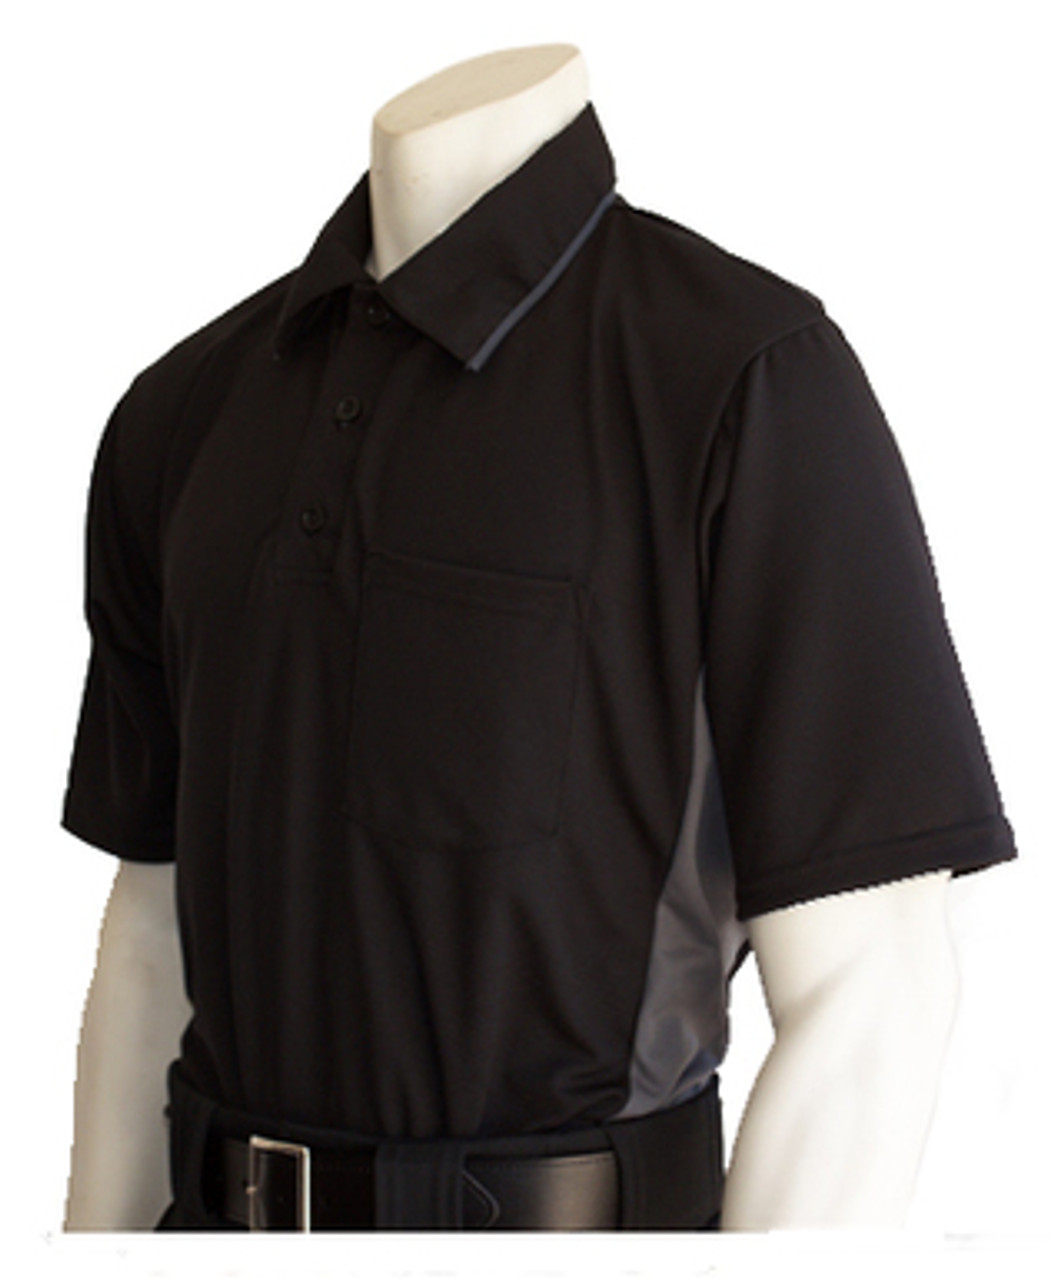 TSE Smitty Short Sleeve MLB Style Umpire Shirt